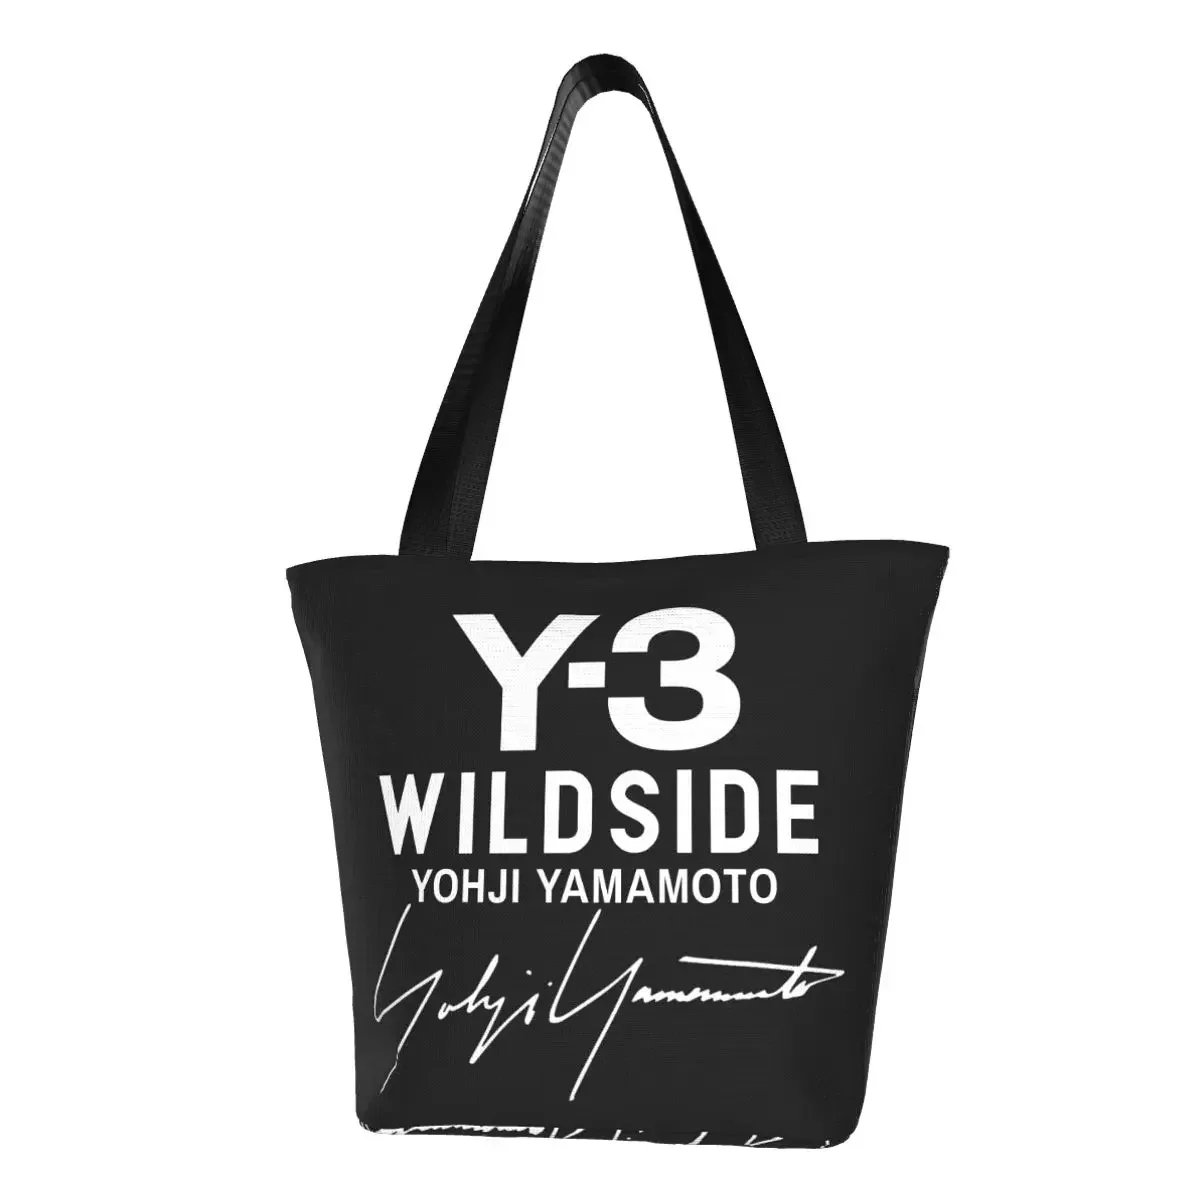 

3Y WILDSIDE Yohji Yamamoto Groceries Shopping Tote Bag Women Kawaii Canvas Shopper Shoulder Bags Large Capacity Handbags